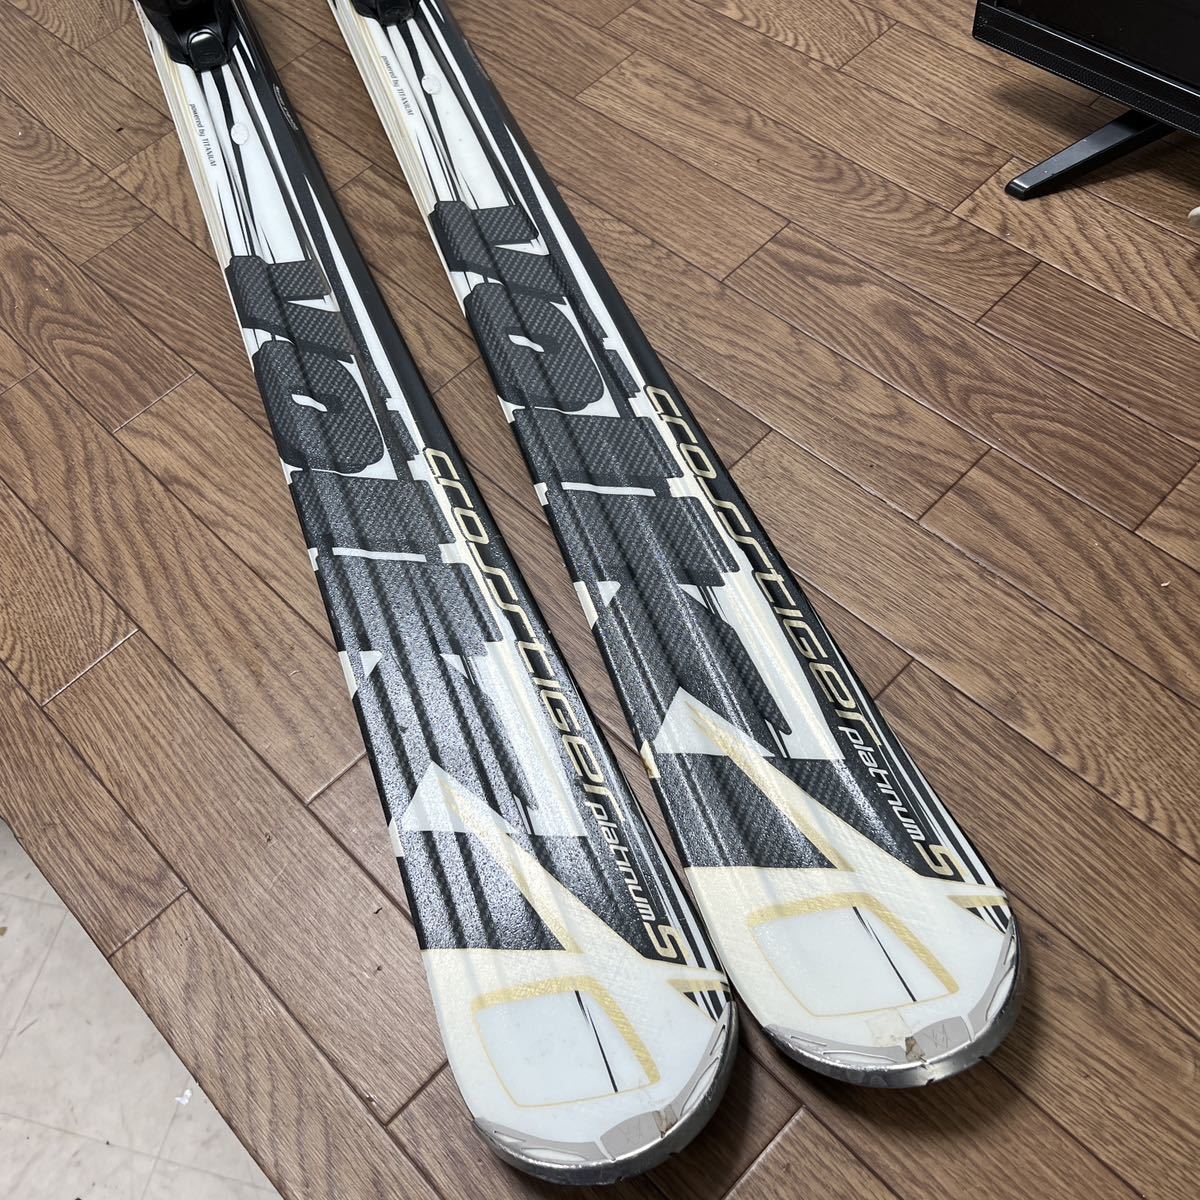 E796★VOLKL CROSSTIGER 168cm スキー板の画像2